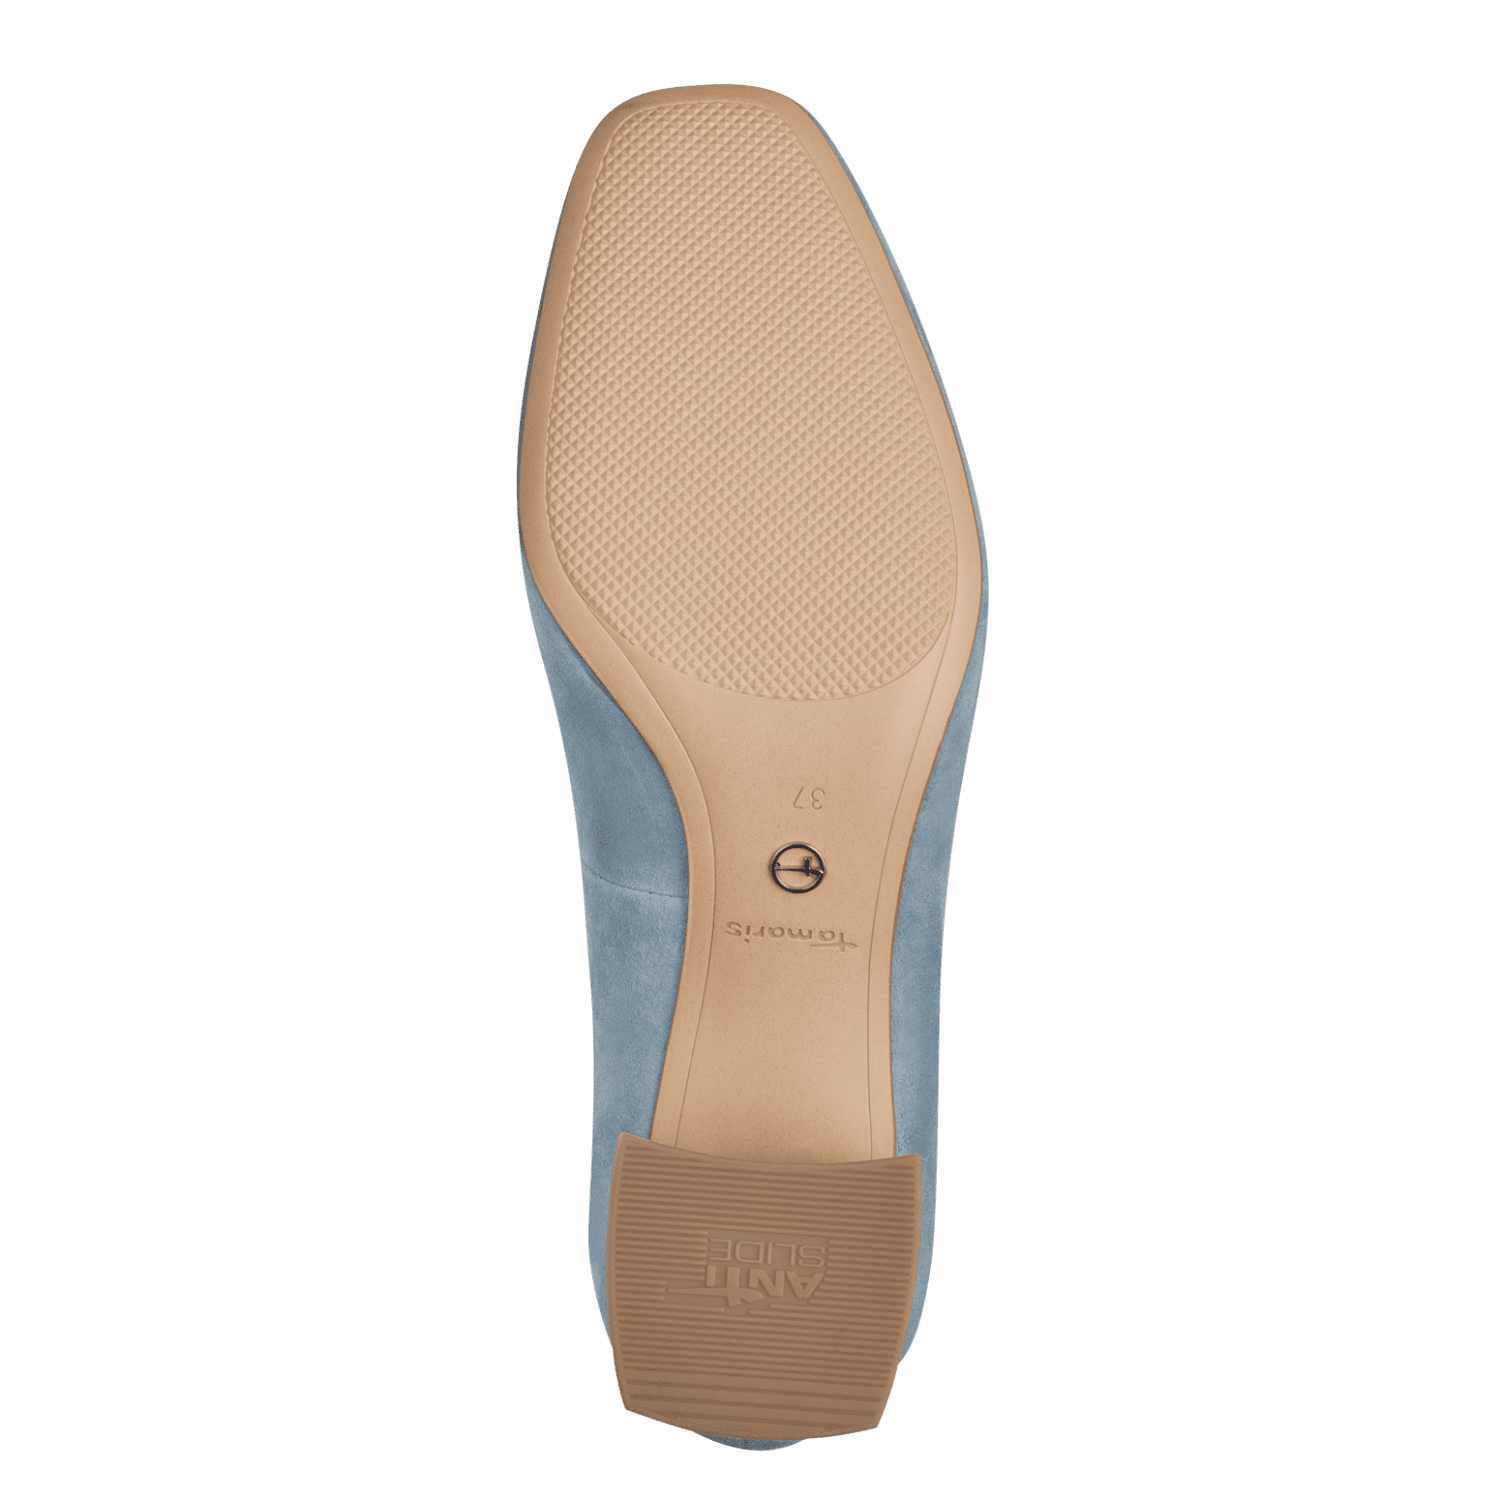 Pantofi Piele Naturala Lisette Blue Light